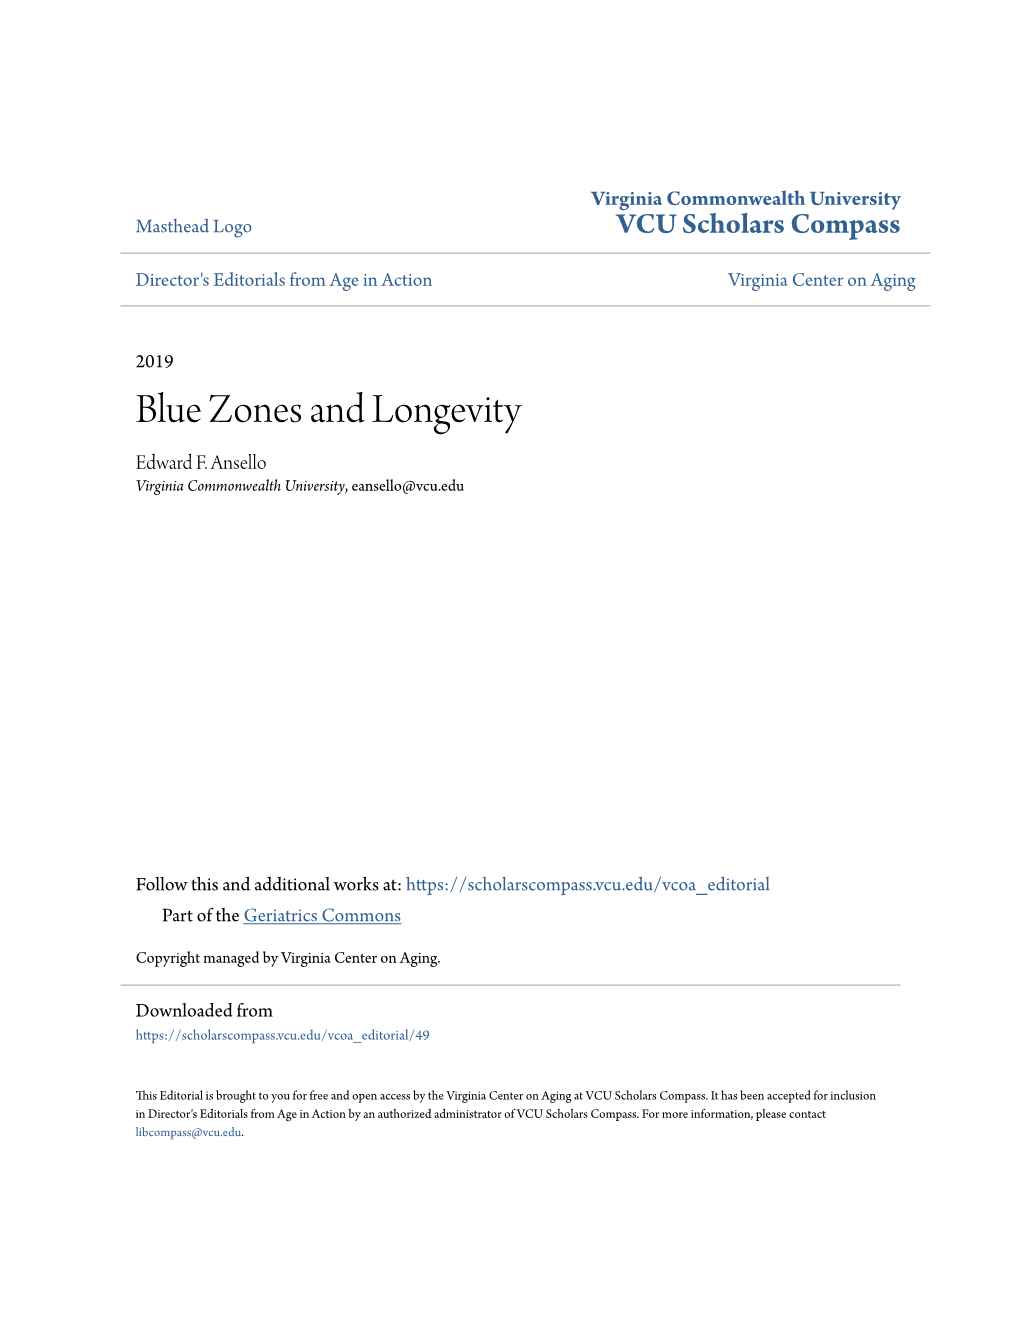 Blue Zones and Longevity Edward F